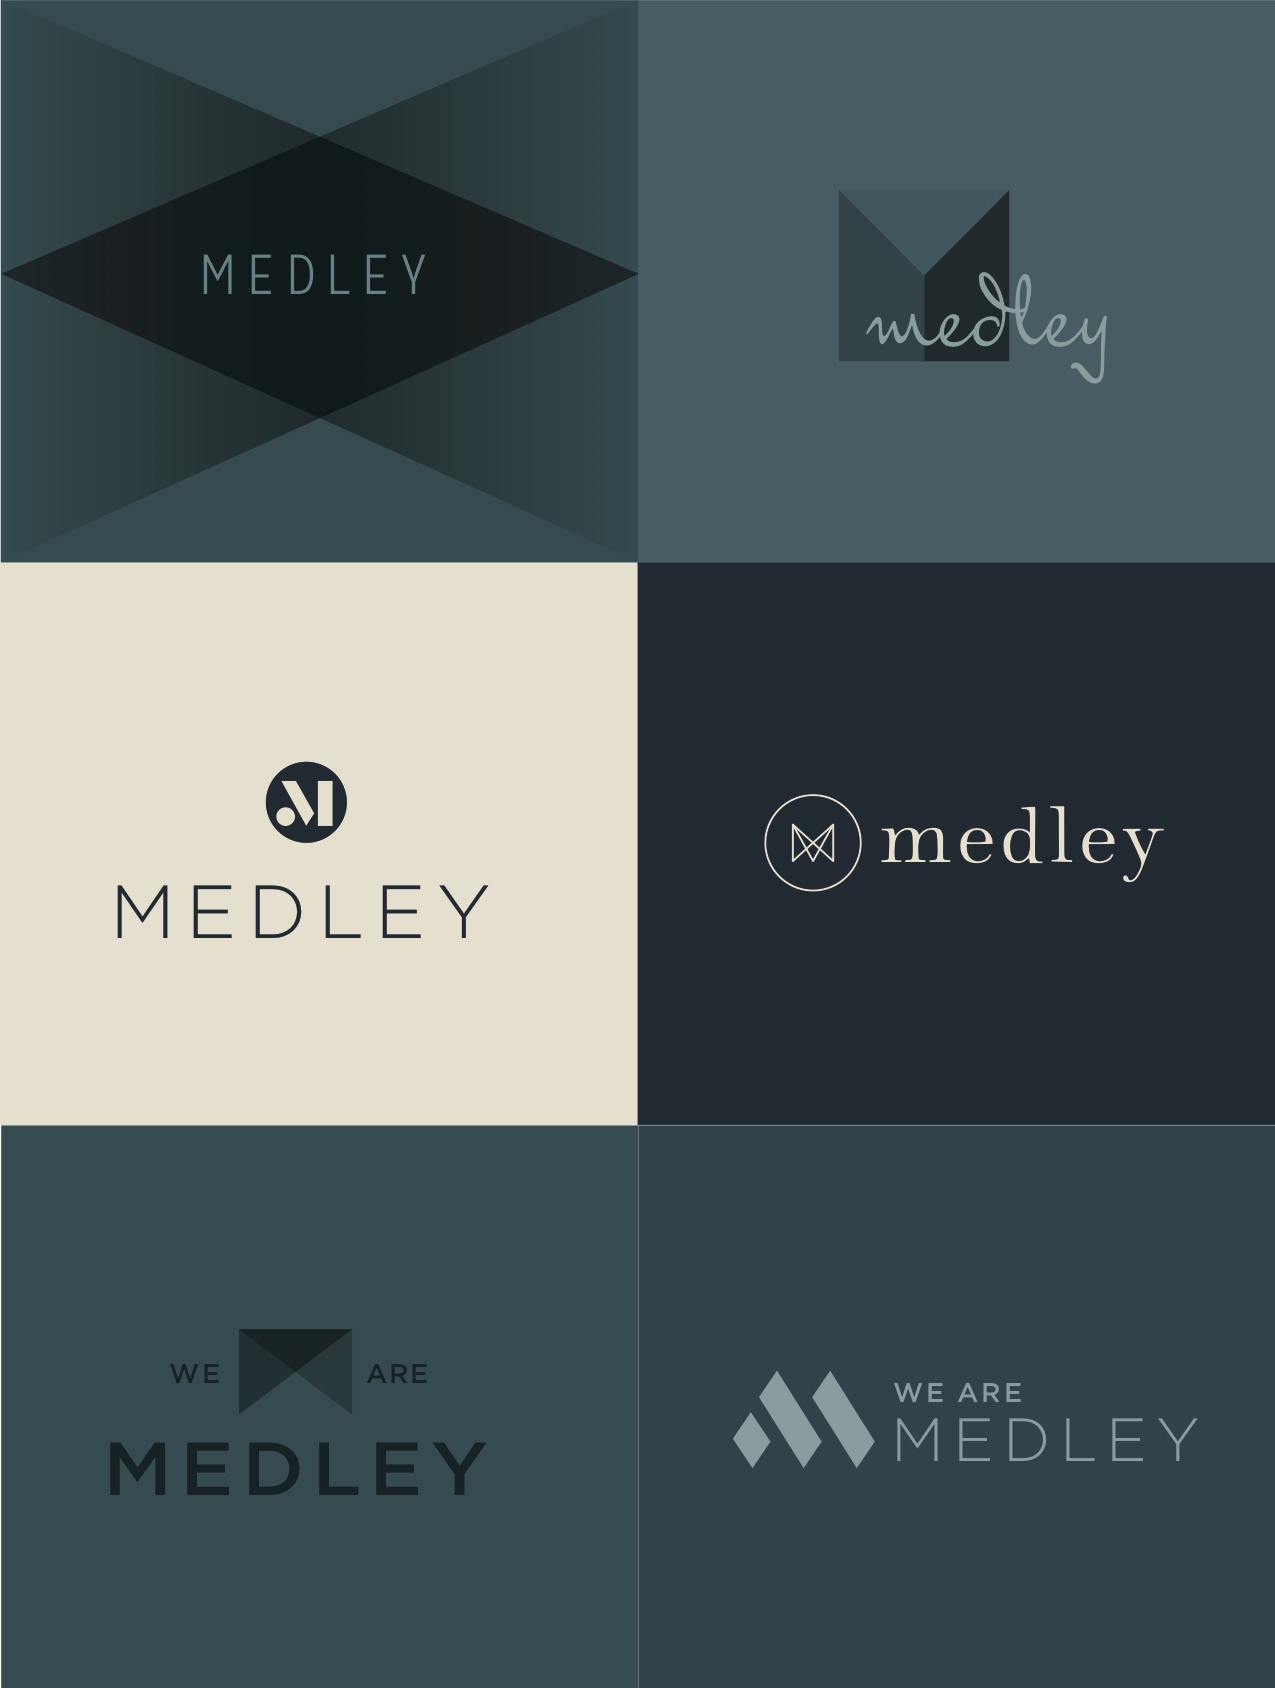 medley_logopalooza 5.jpg